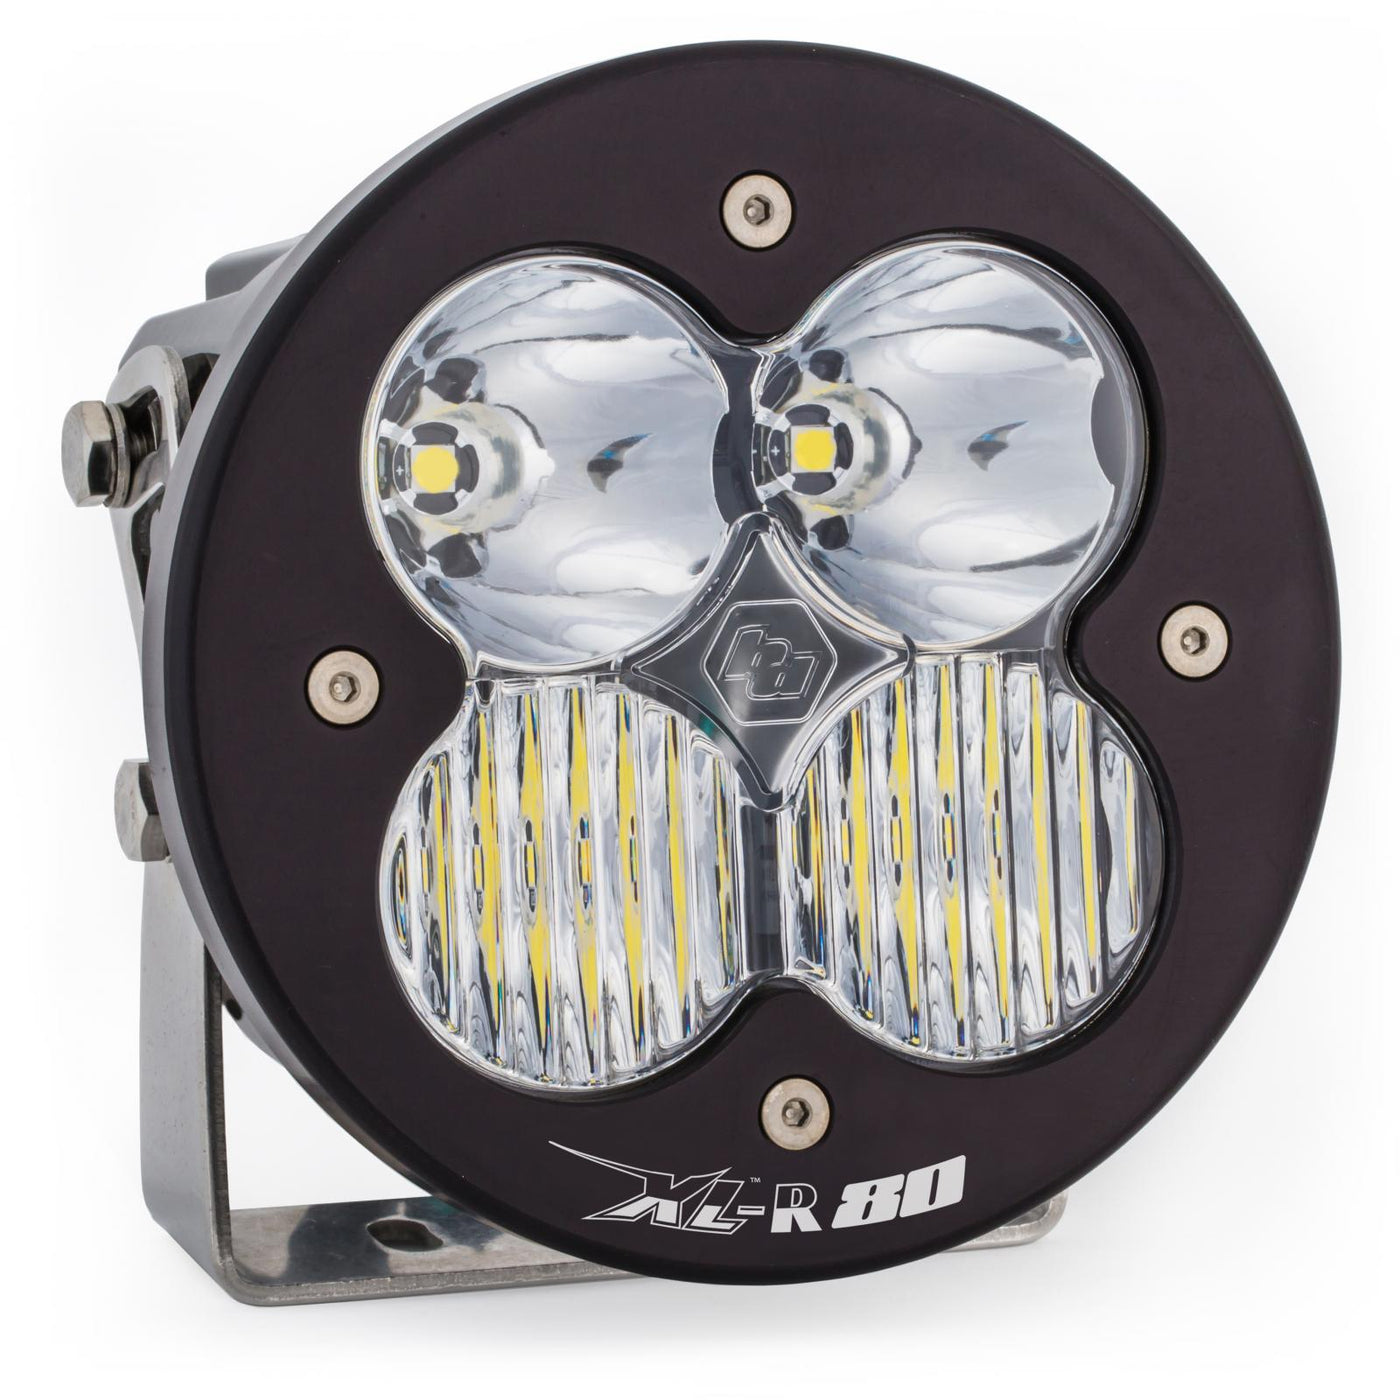 Baja Designs 760003 LED Light Pods Clear Lens Spot XL R 80 DrivingCombo